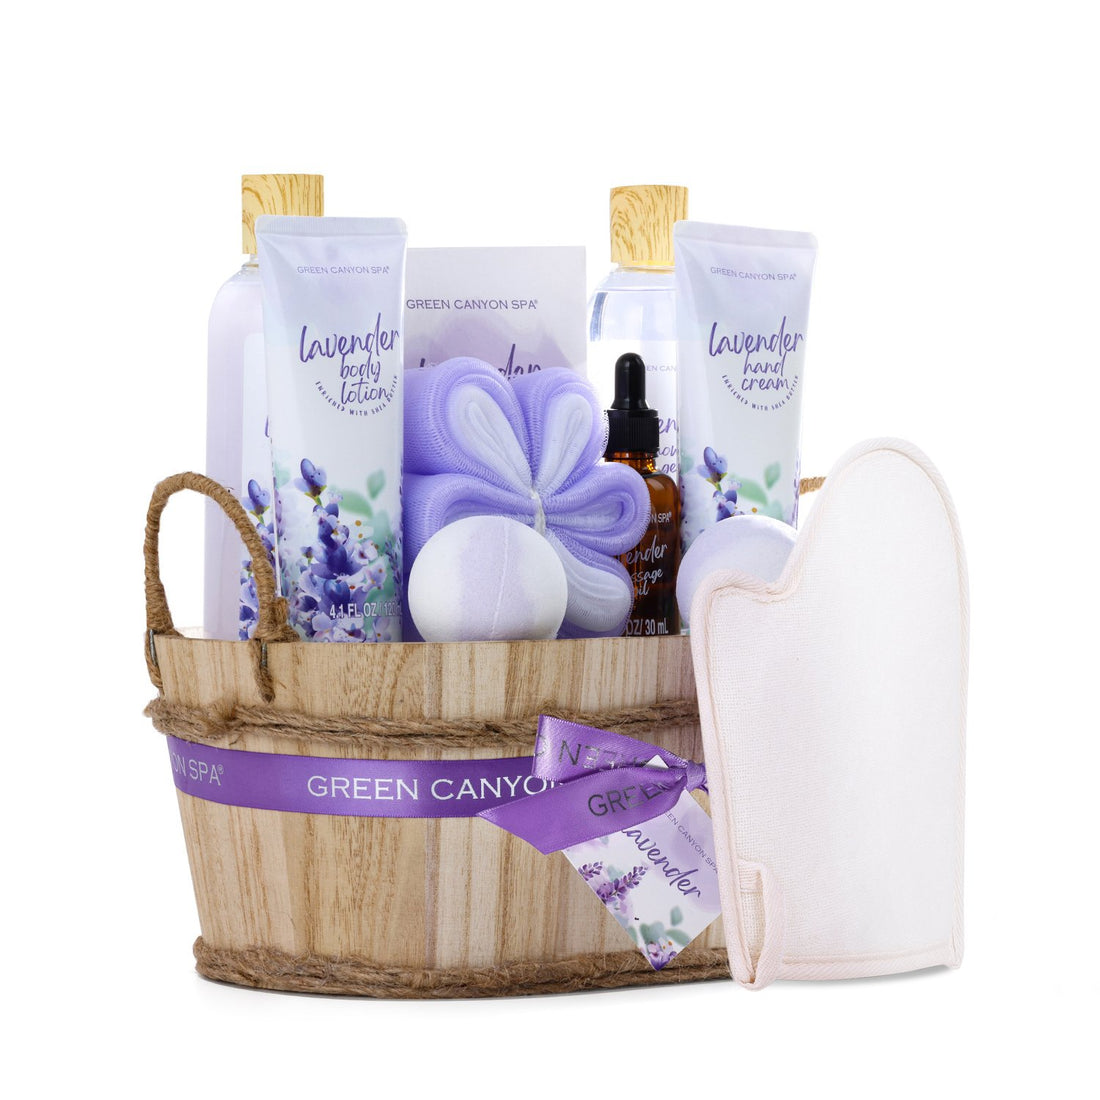 Green Canyon Spa Gift Sets Lavender Bath and Body Set